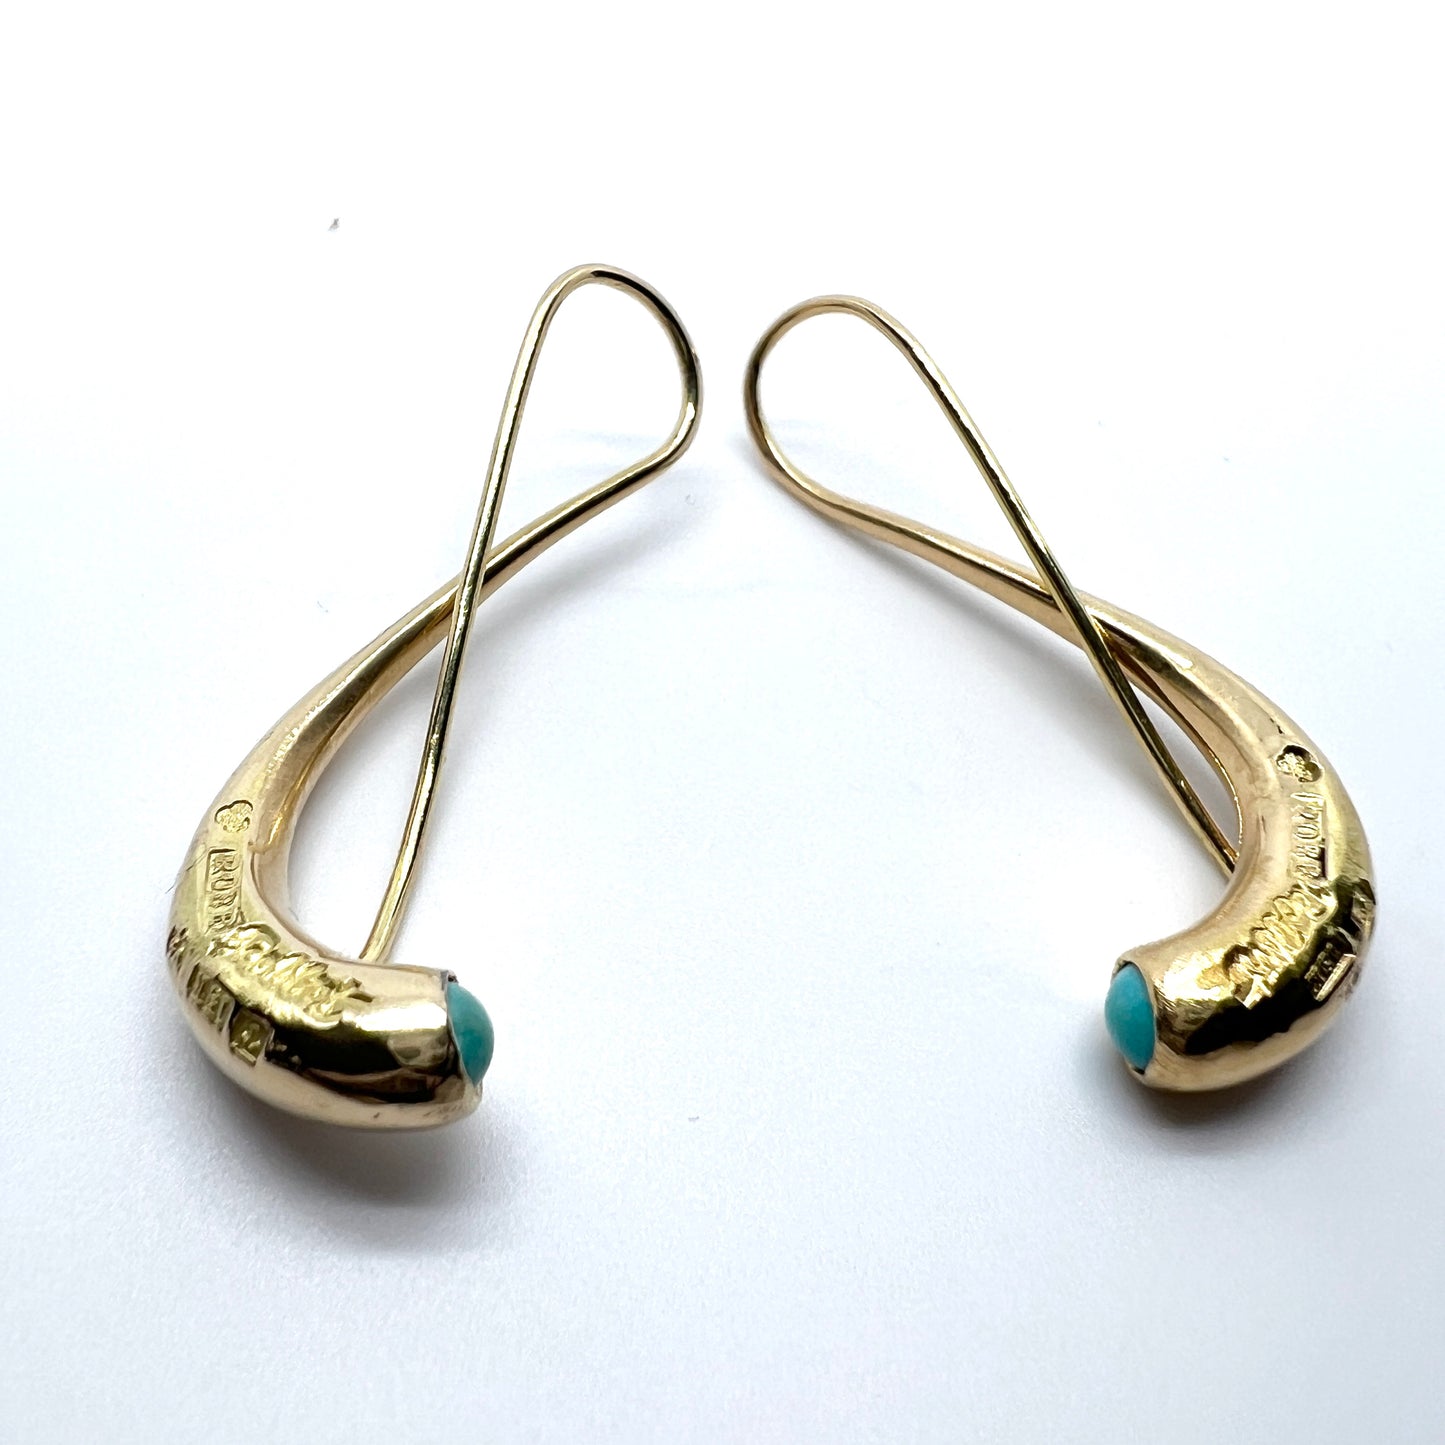 Robbert, Sweden 1965. Unique Vintage Modernist 18k Gold Turquoise Earrings. Signed